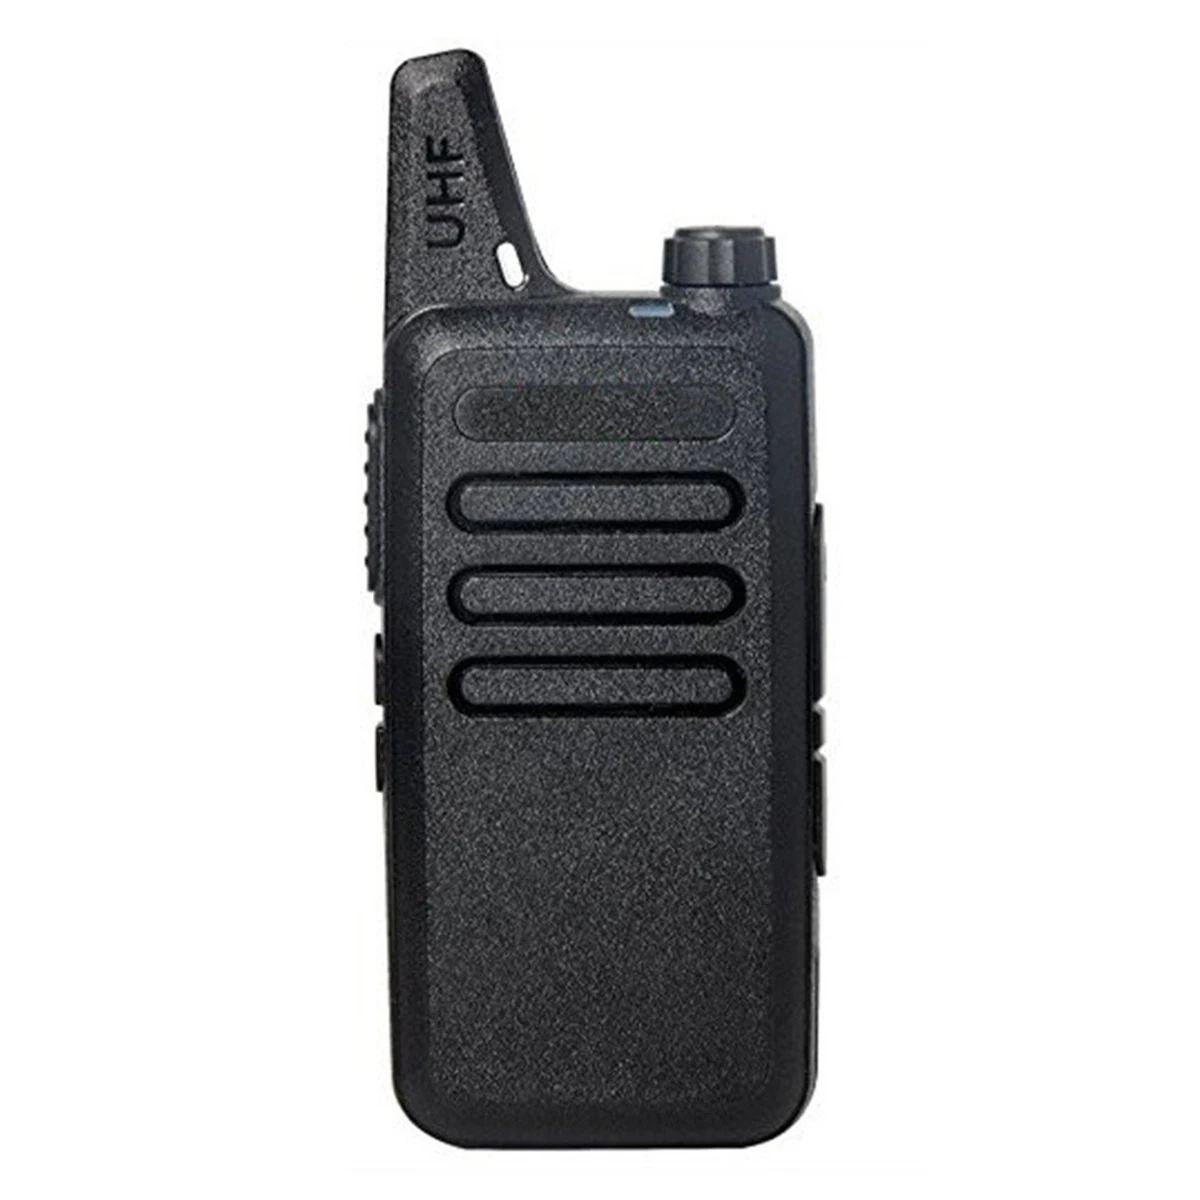 

SOONHUA UHF 400-470MHz 5W Walkie Talkie 16 Channel Mini Handheld Two Way Radio Walkie Talkies Transceiver